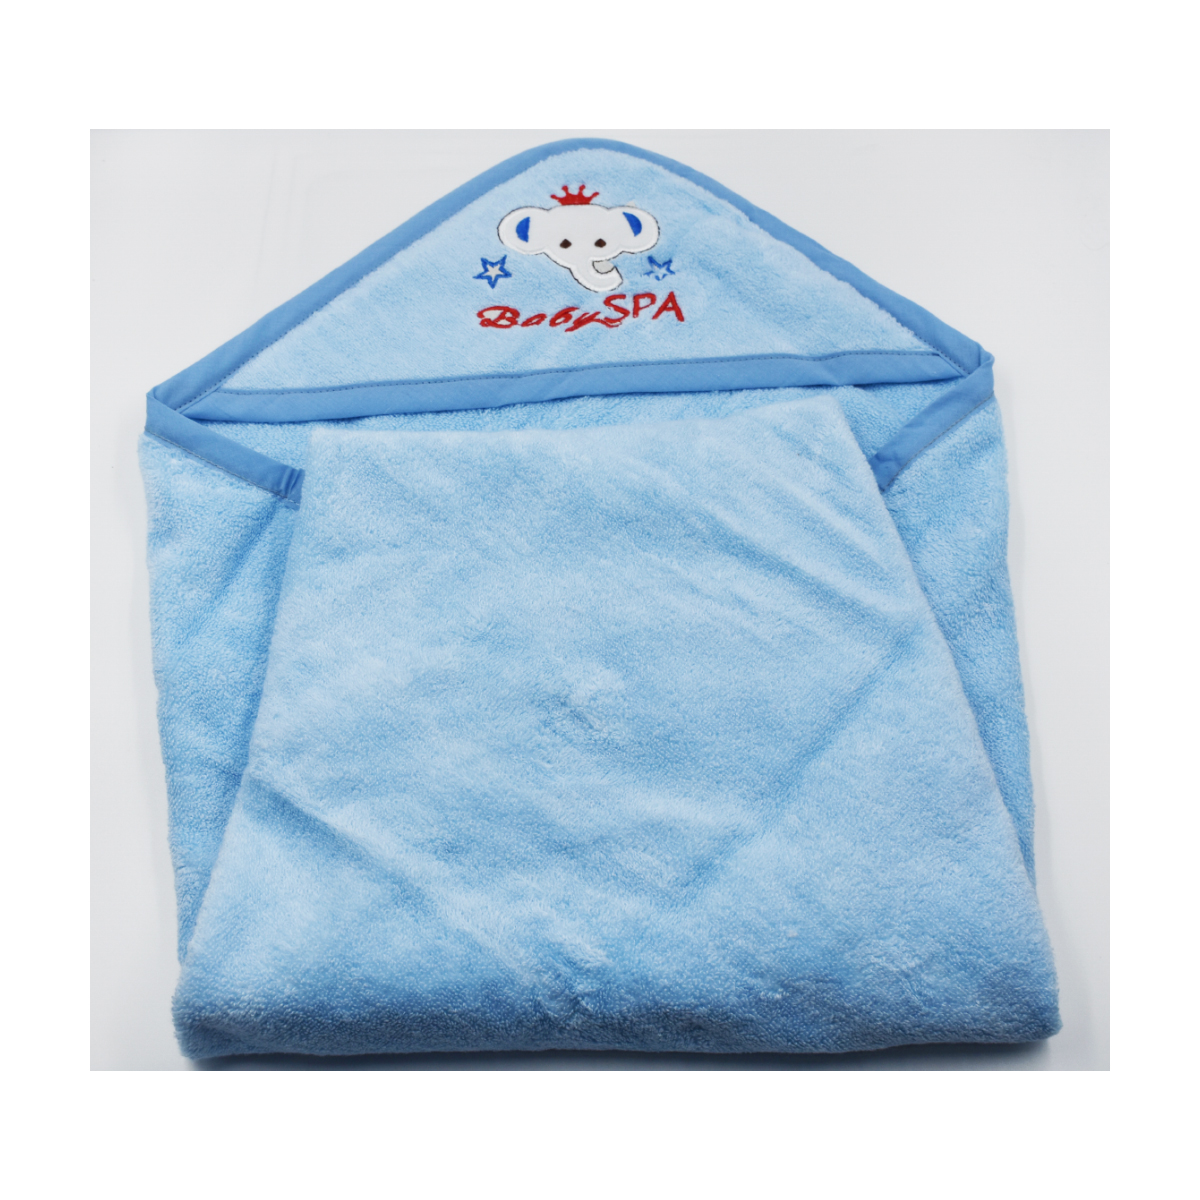 BabySPA Cloth Hooded Towel (Blue)